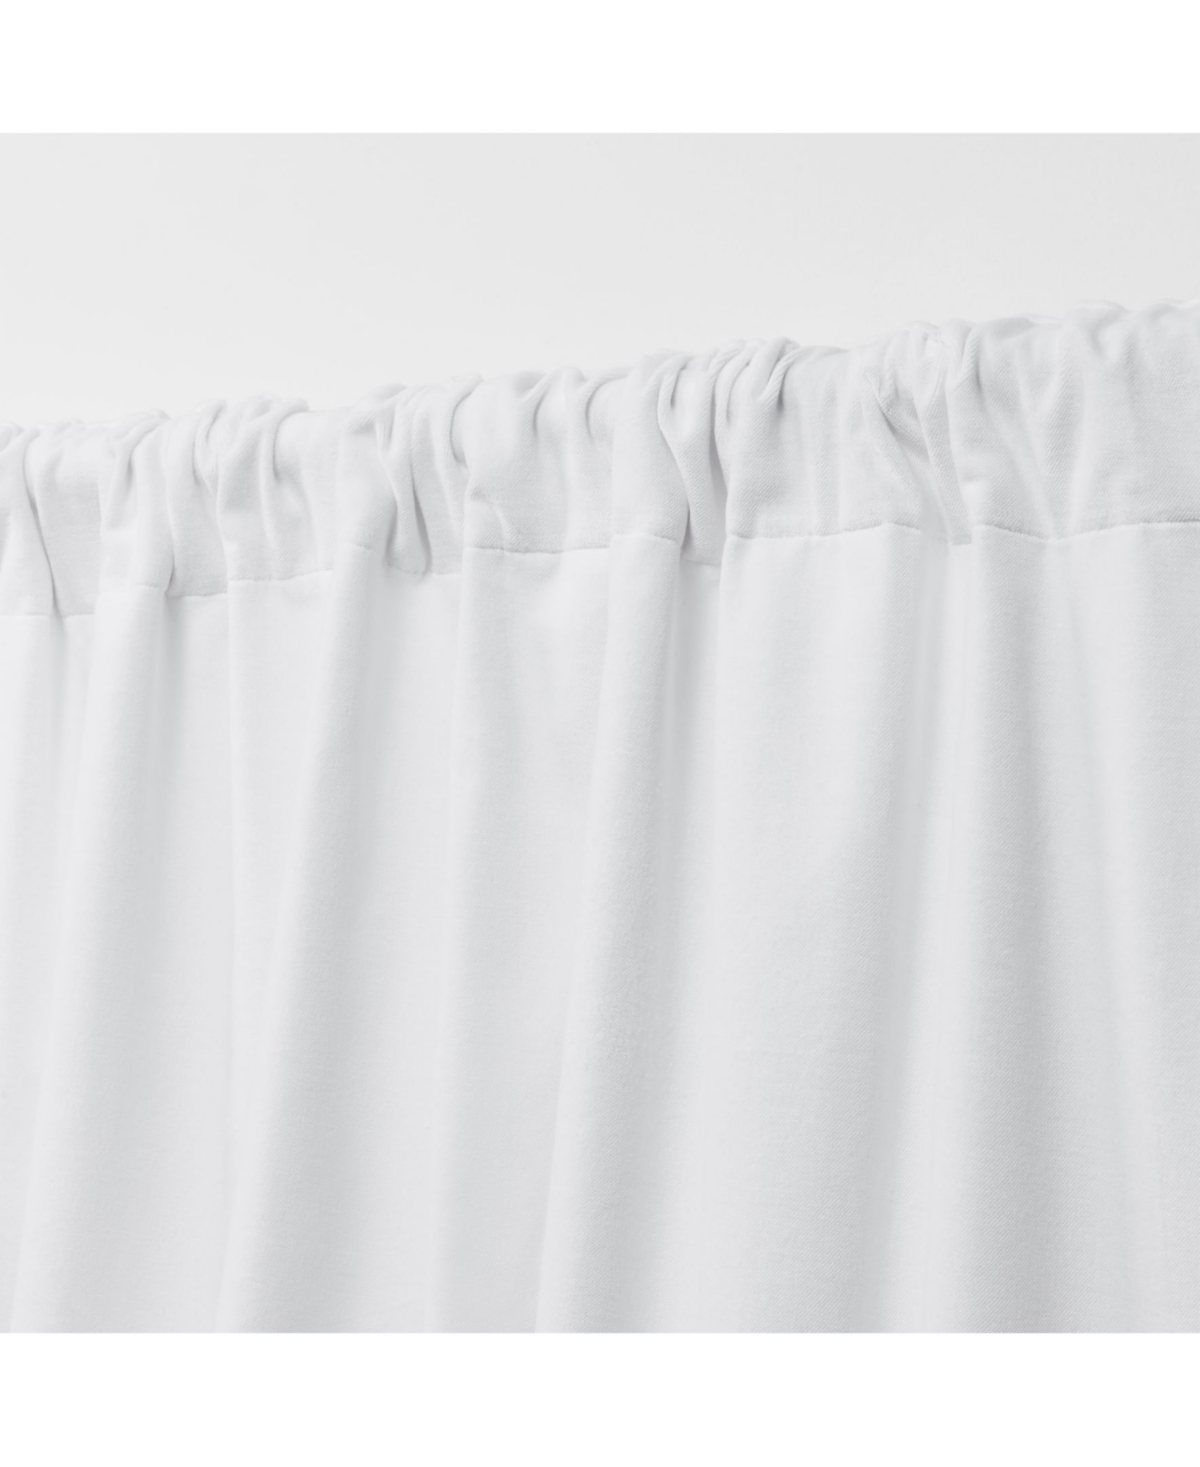 Shop Lauren Ralph Lauren Velvety Room Darkening Back Tab Rod Pocket Curtain Panel, 52" X 63" In Charcoal